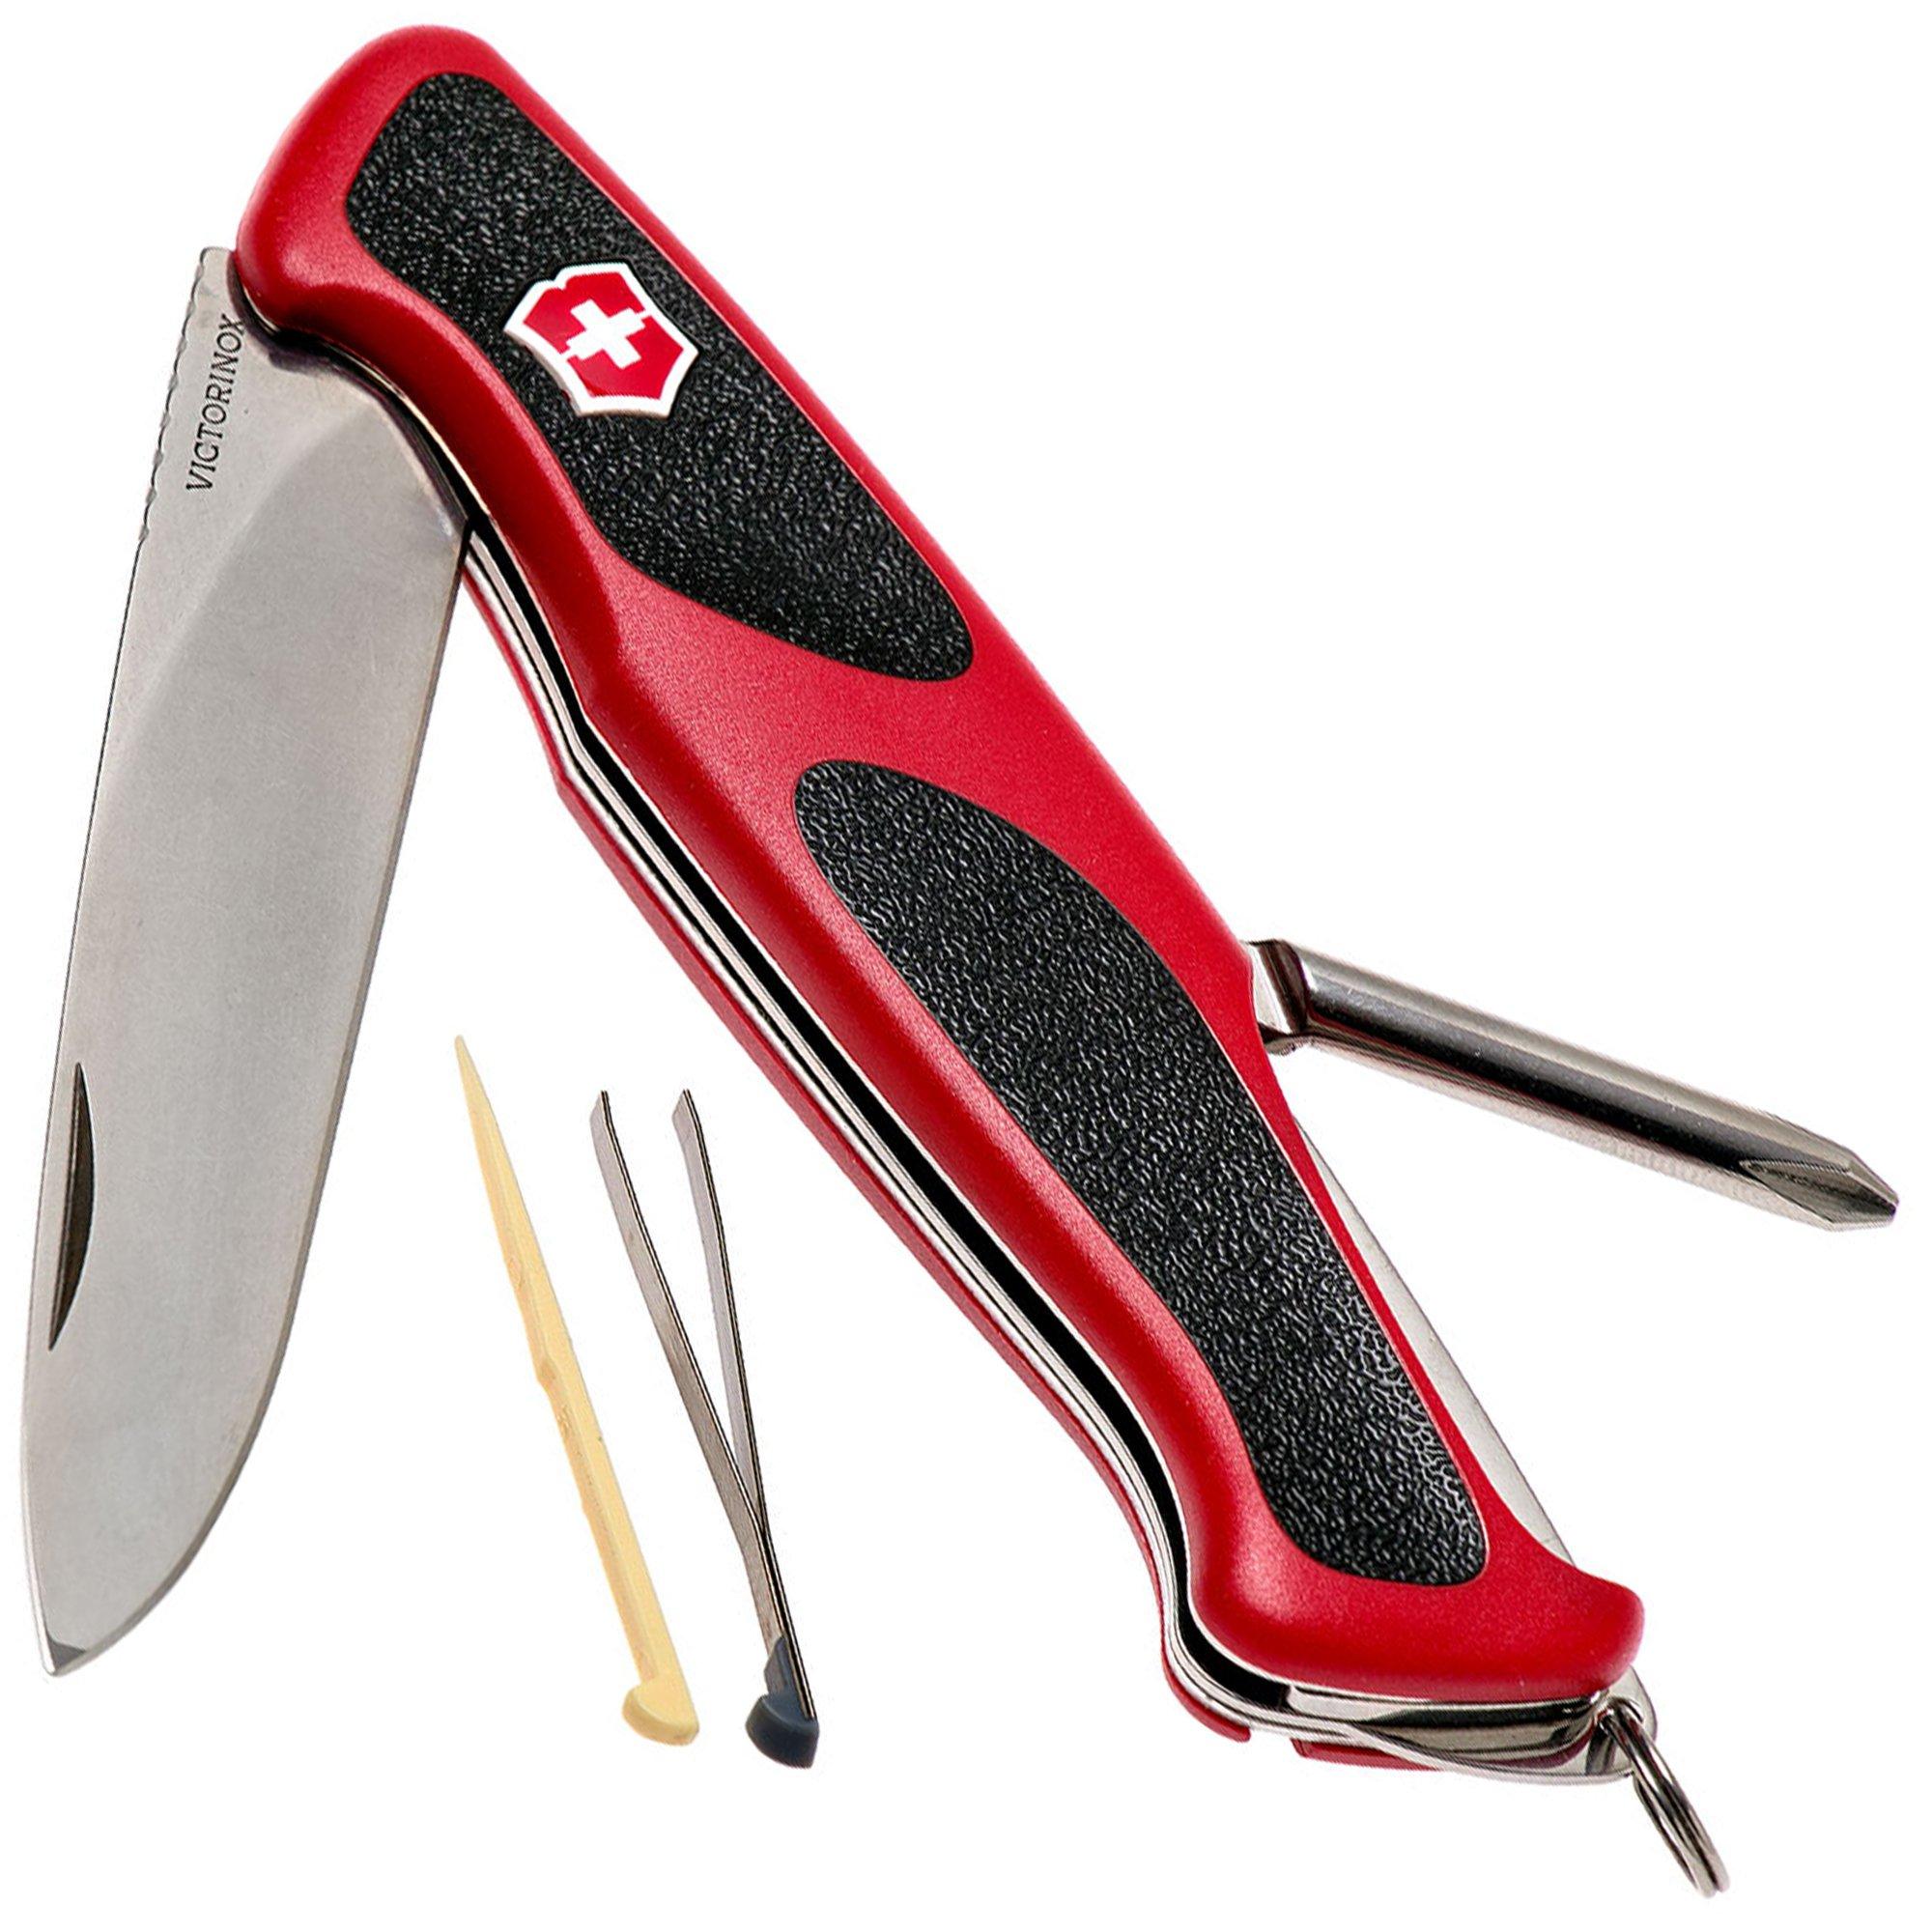 Victorinox RangerGrip 53, Swiss pocket knife